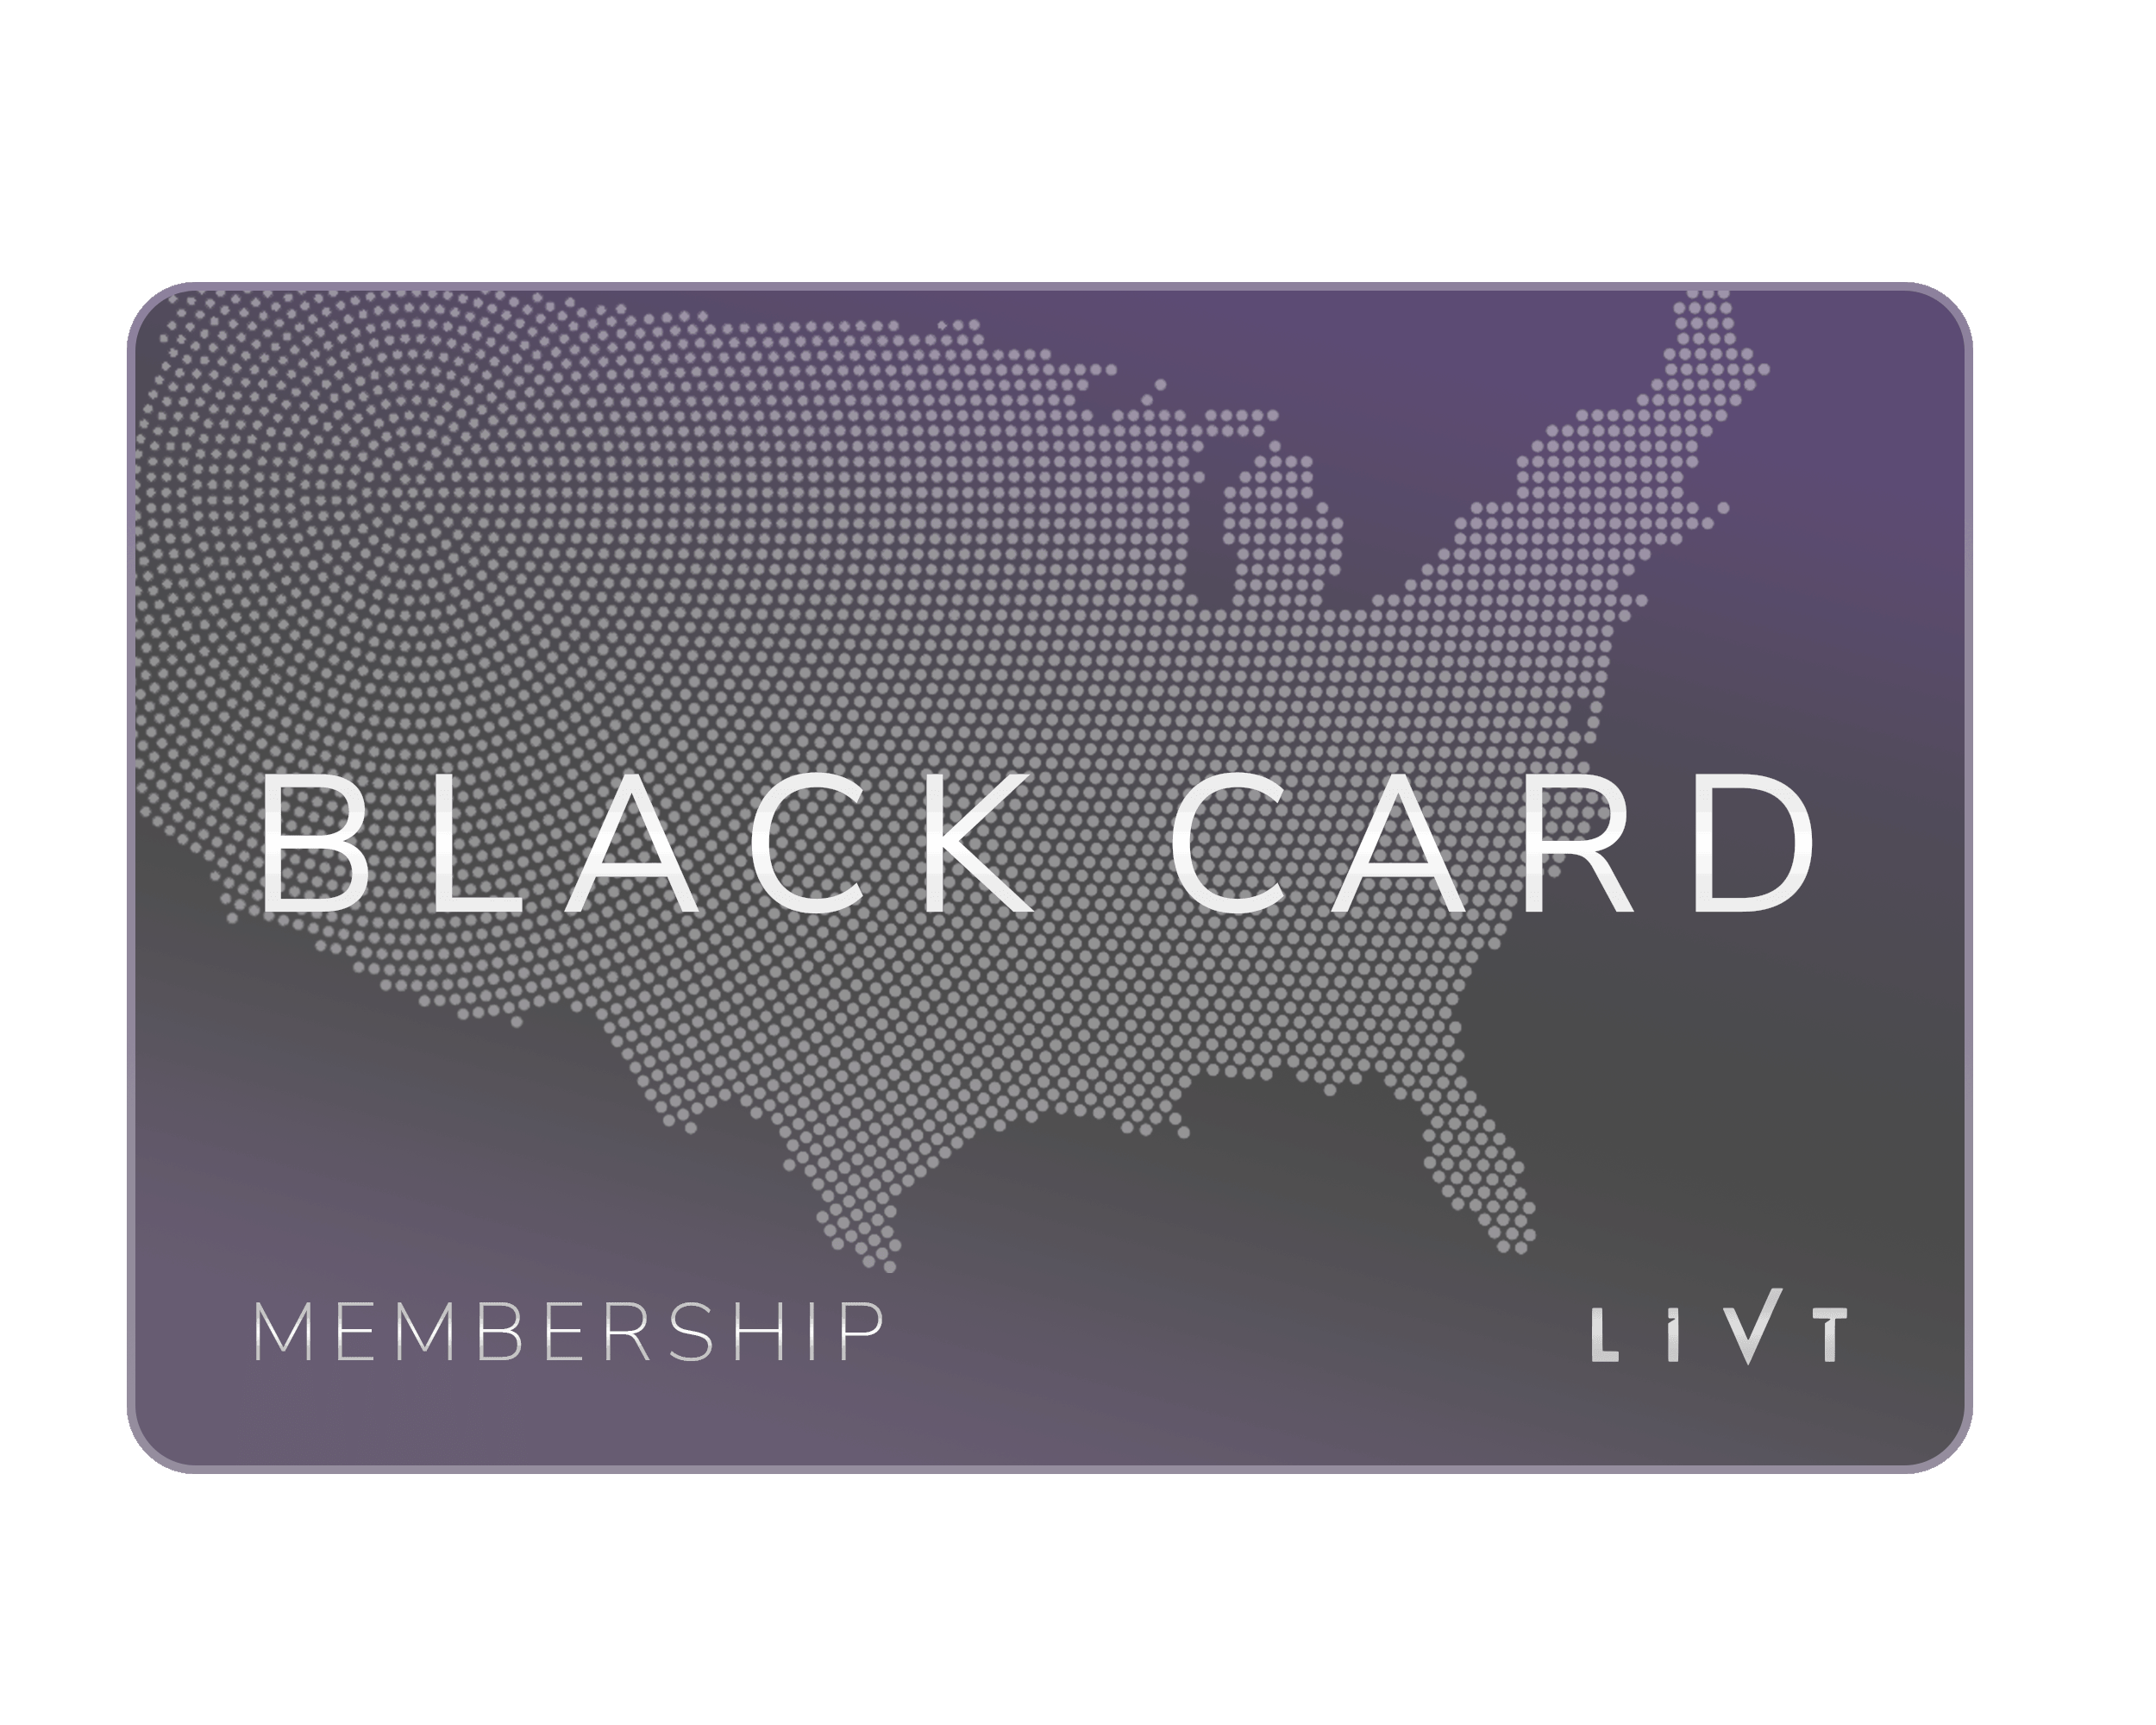 LIVT Black Card